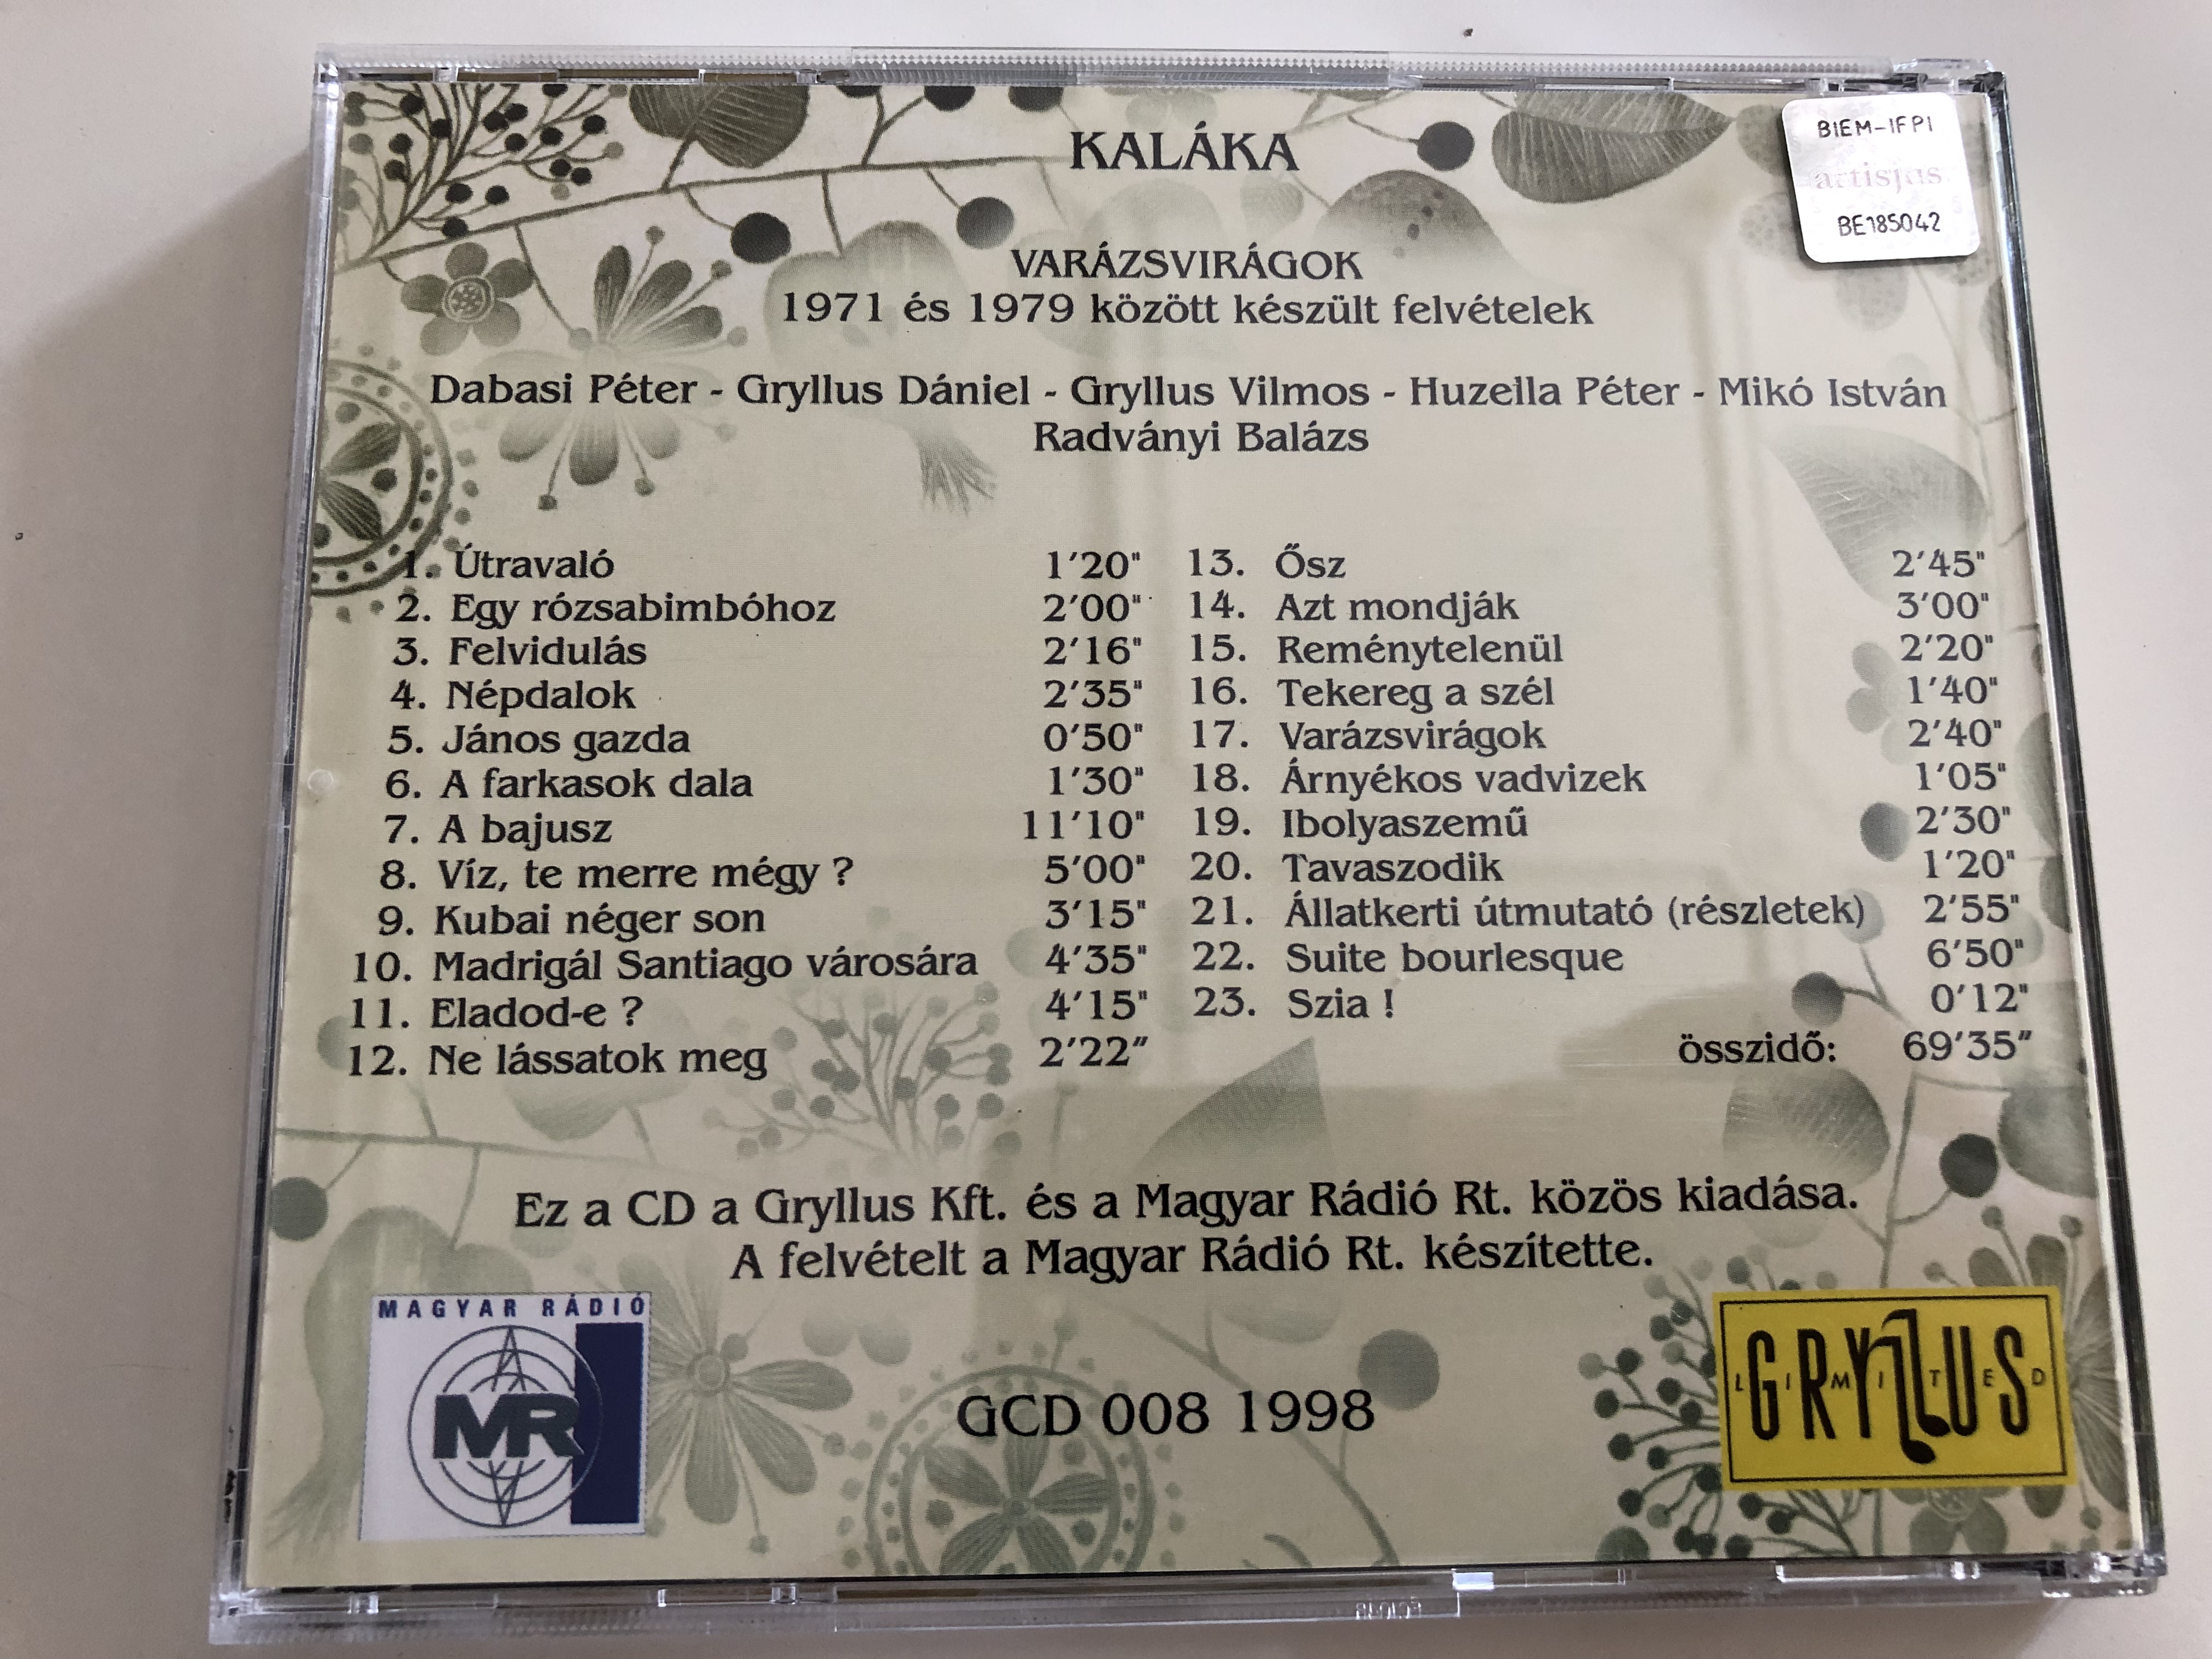 kal-ka-var-zsvir-gok-1971-s-1979-k-z-tt-k-sz-lt-felv-telek-gryllus-magyar-r-di-recordings-1971-1979-audio-cd-1998-gcd-008-6-.jpg